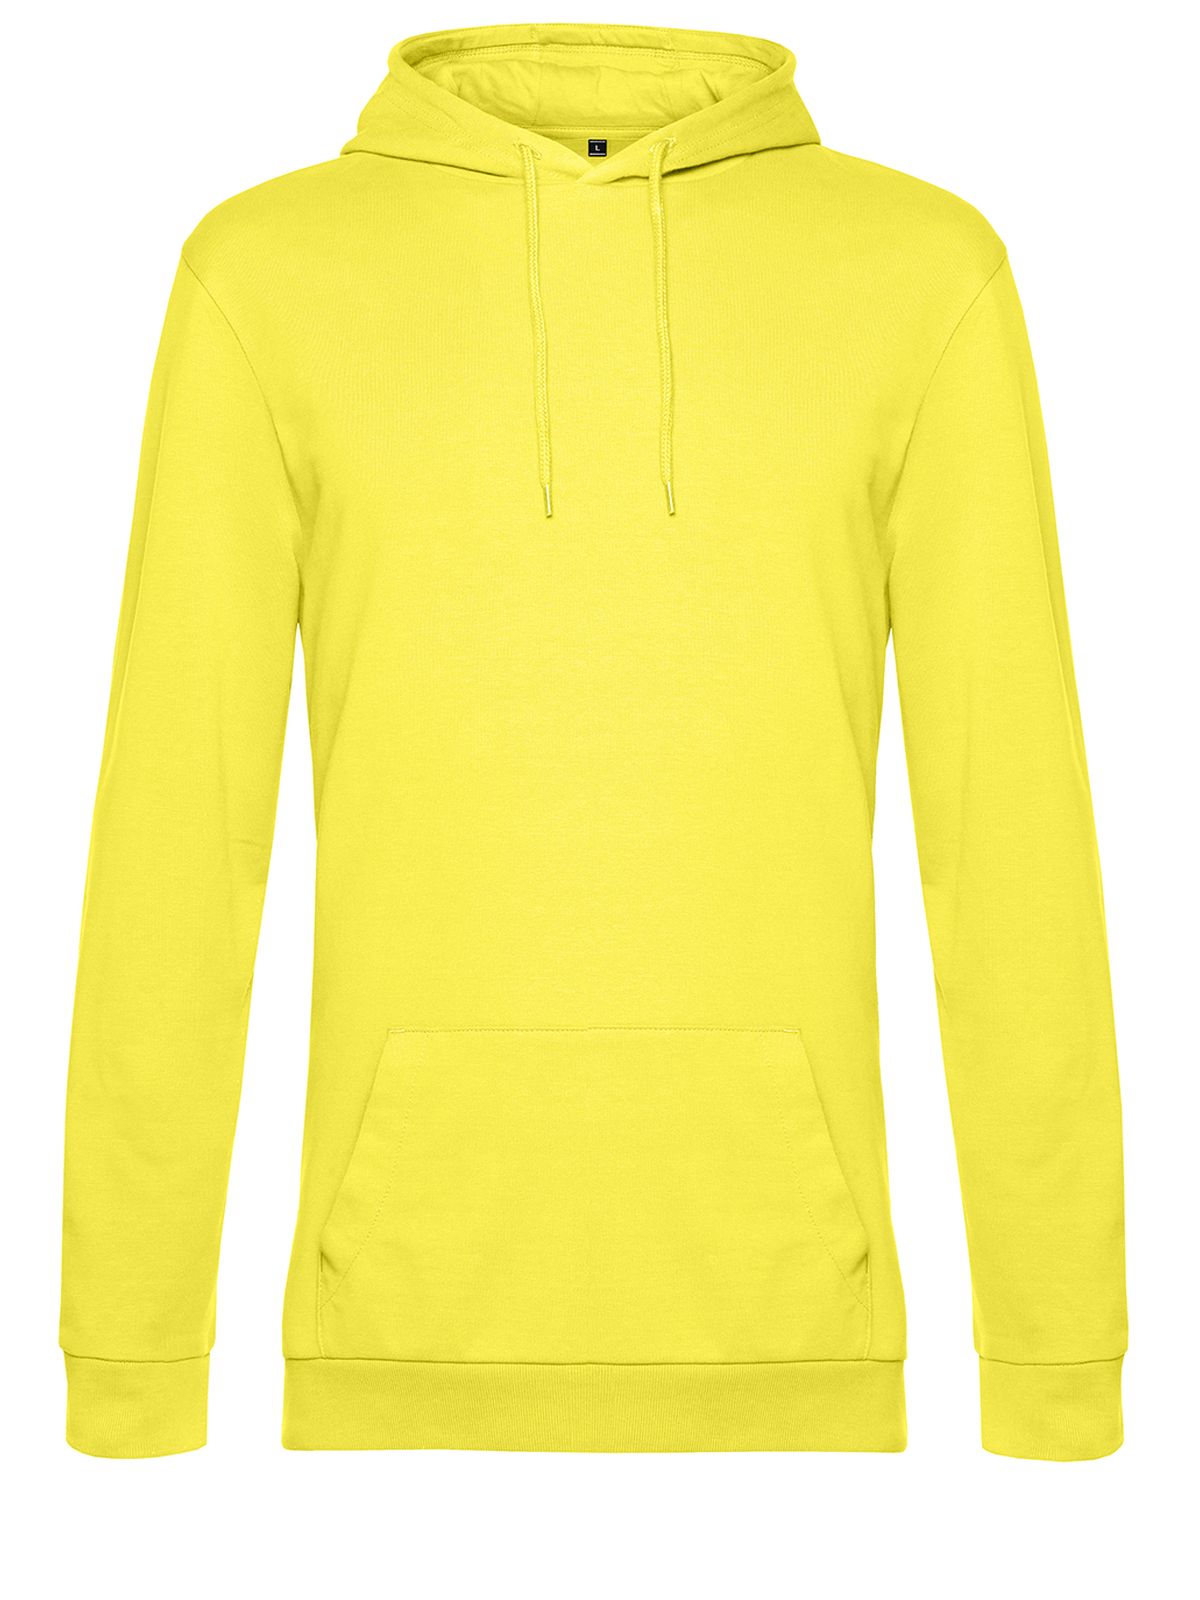 hoodie-solar-yellow.webp